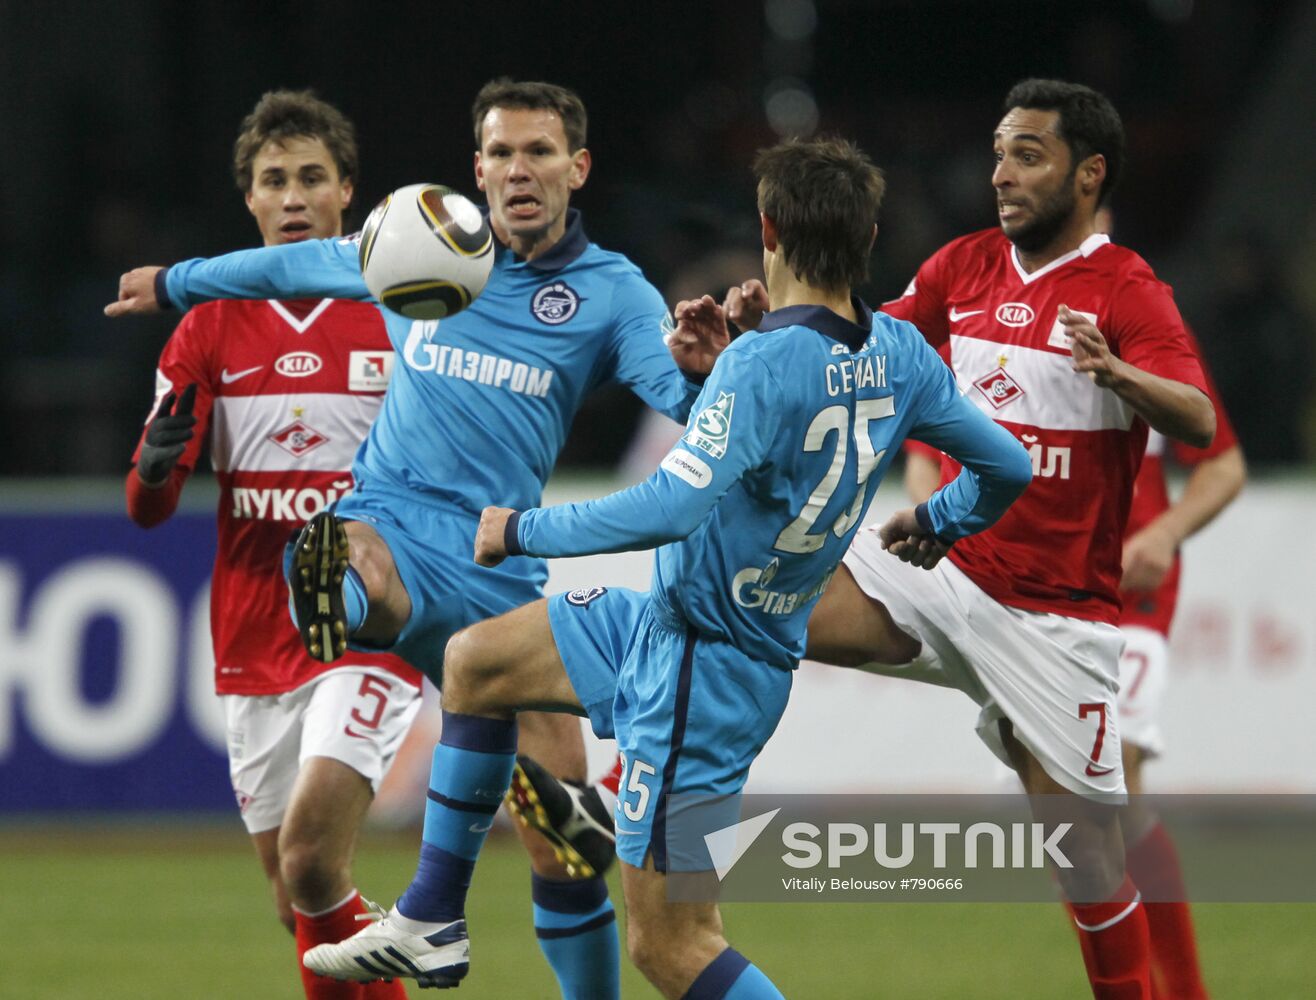 Football. Spartak Moscow vs. Zenit St Petersburg